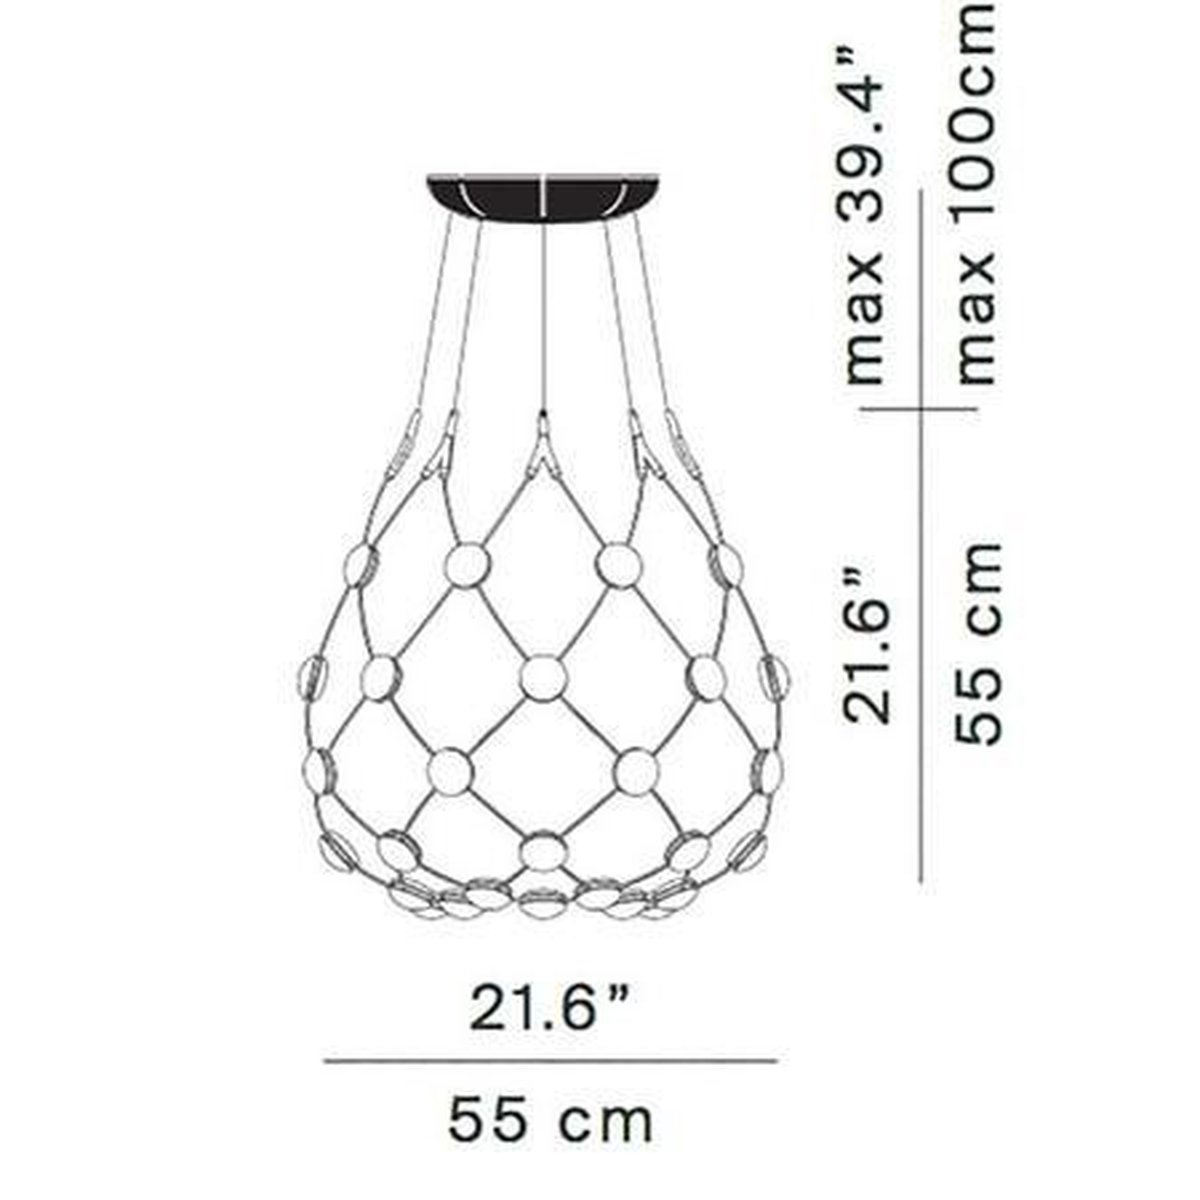 achterlijk persoon Lucht hoogte Luceplan Mesh 55 hanglamp 1m snoer | bol.com